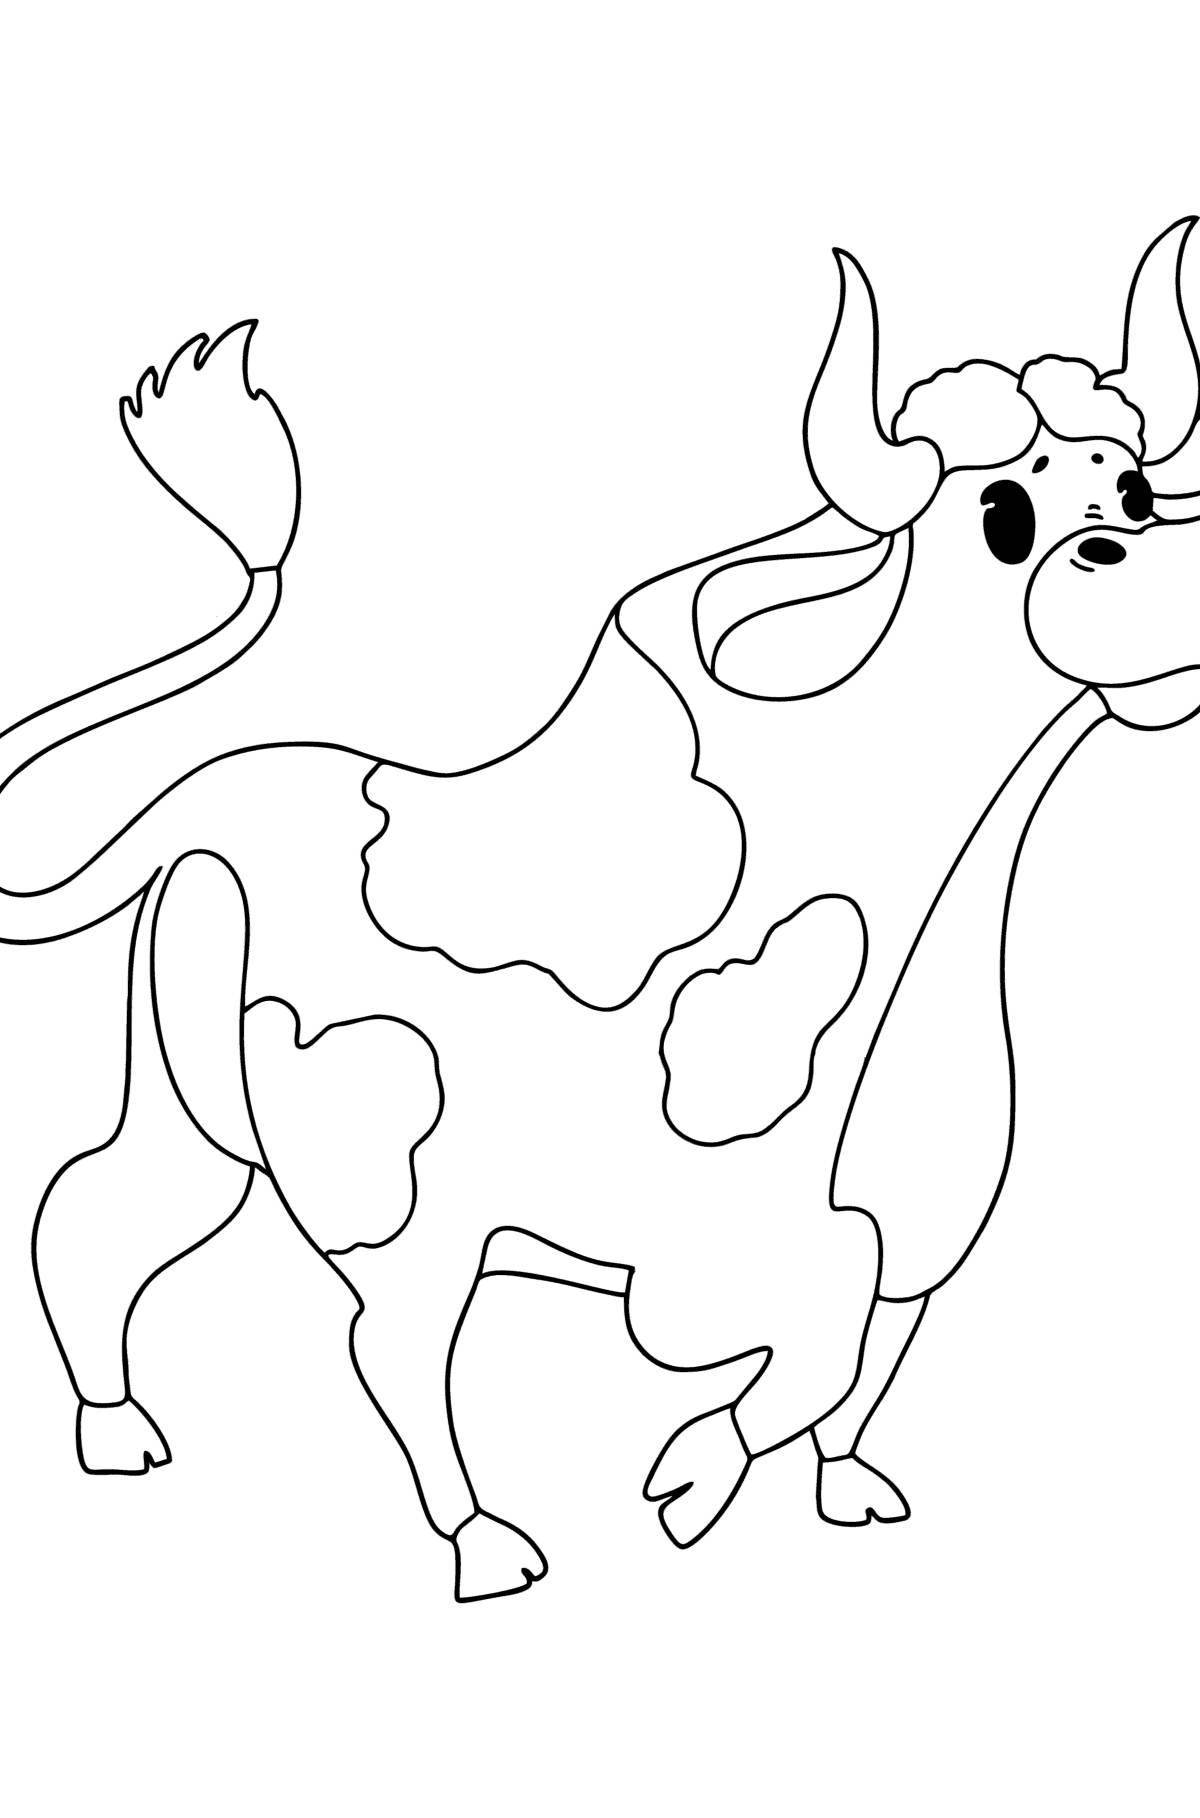 Забавная раскраска коровы для детей 3-4 лет